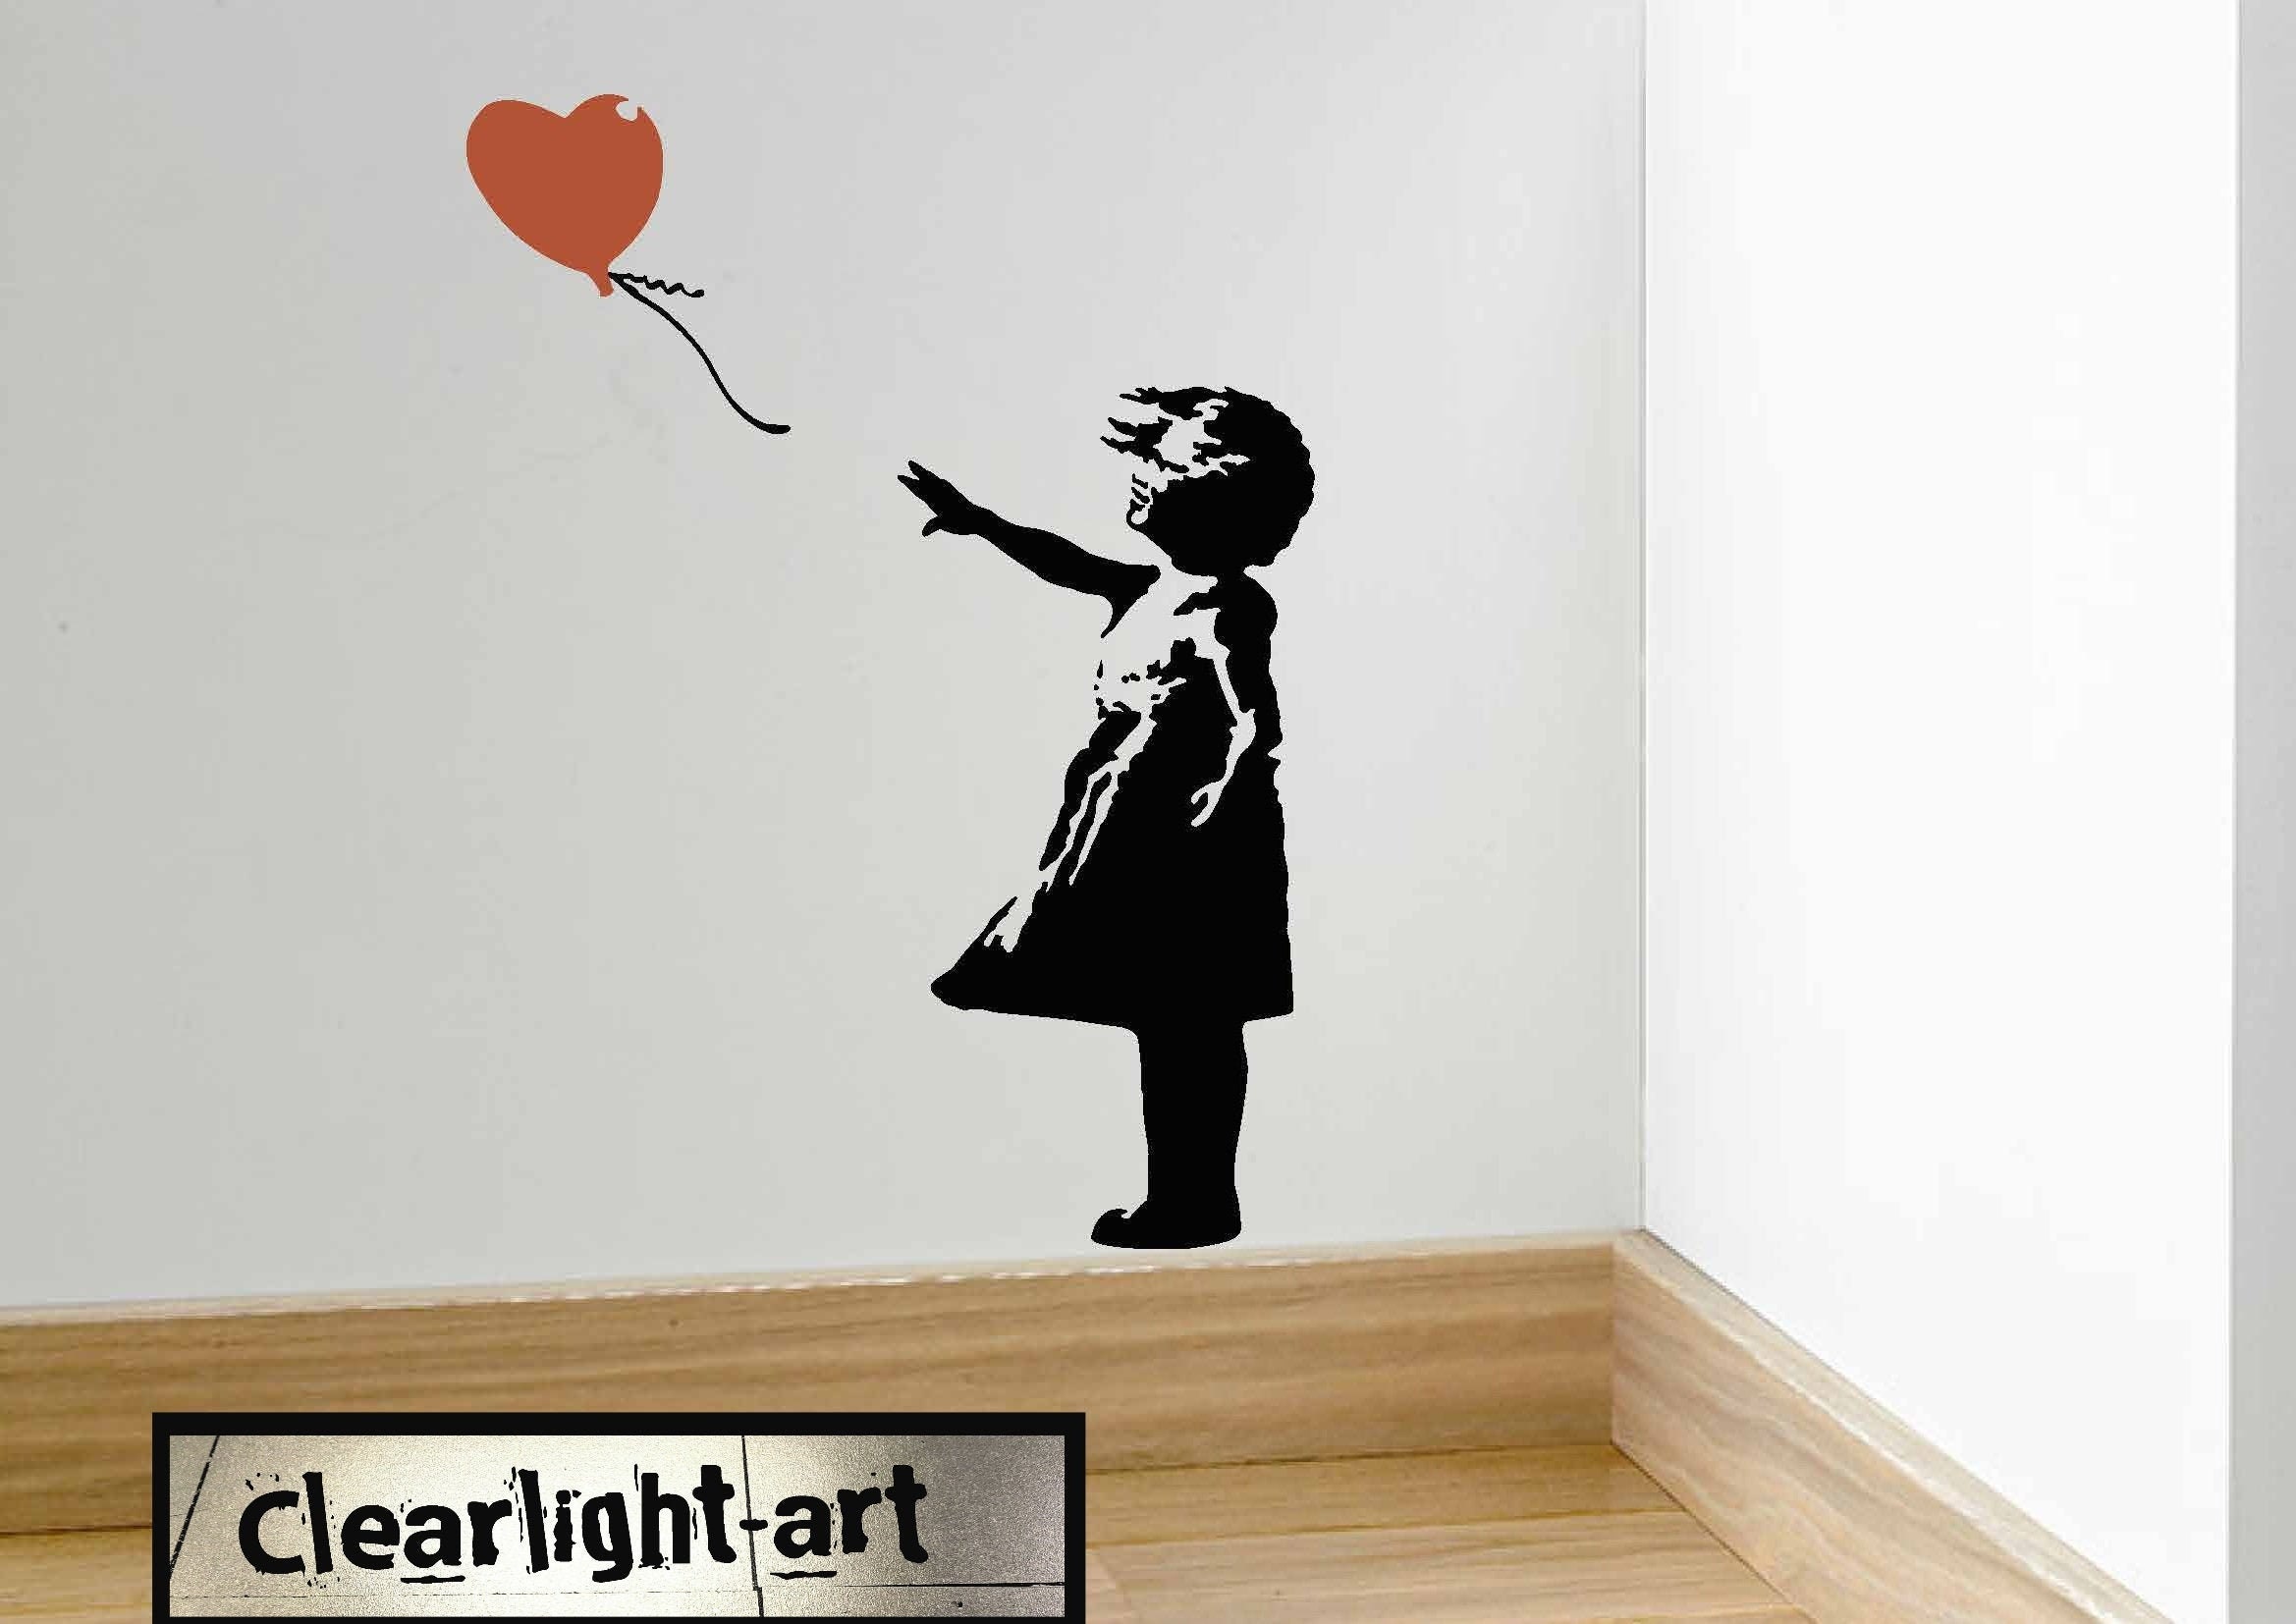 Banksy Wandtattoo LOVE SICK Girl meets HEART Rat, Streetart